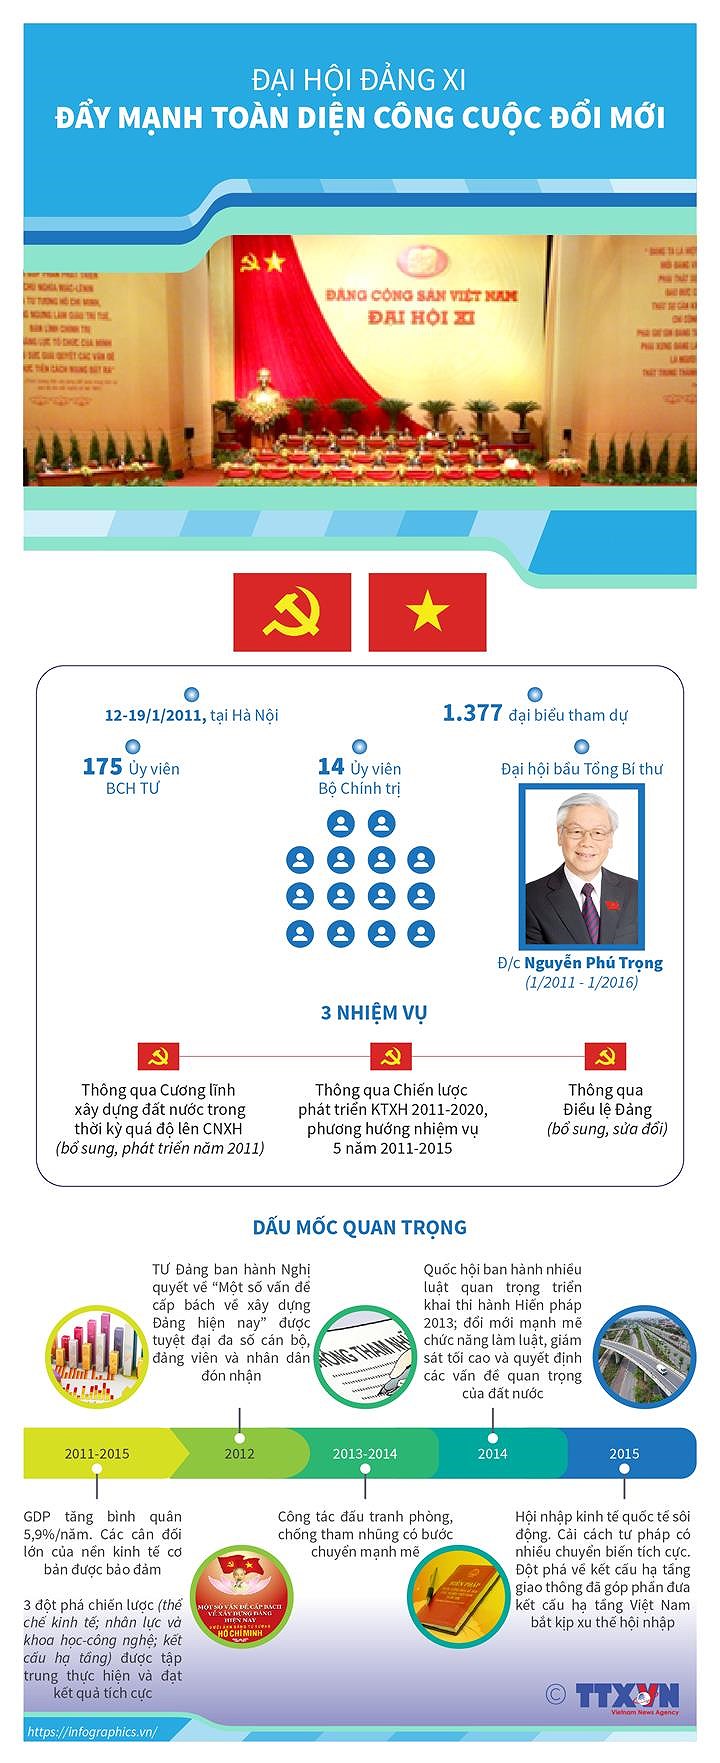 [Infographics] Dai hoi Dang XI: Day manh toan dien cong cuoc doi moi hinh anh 1